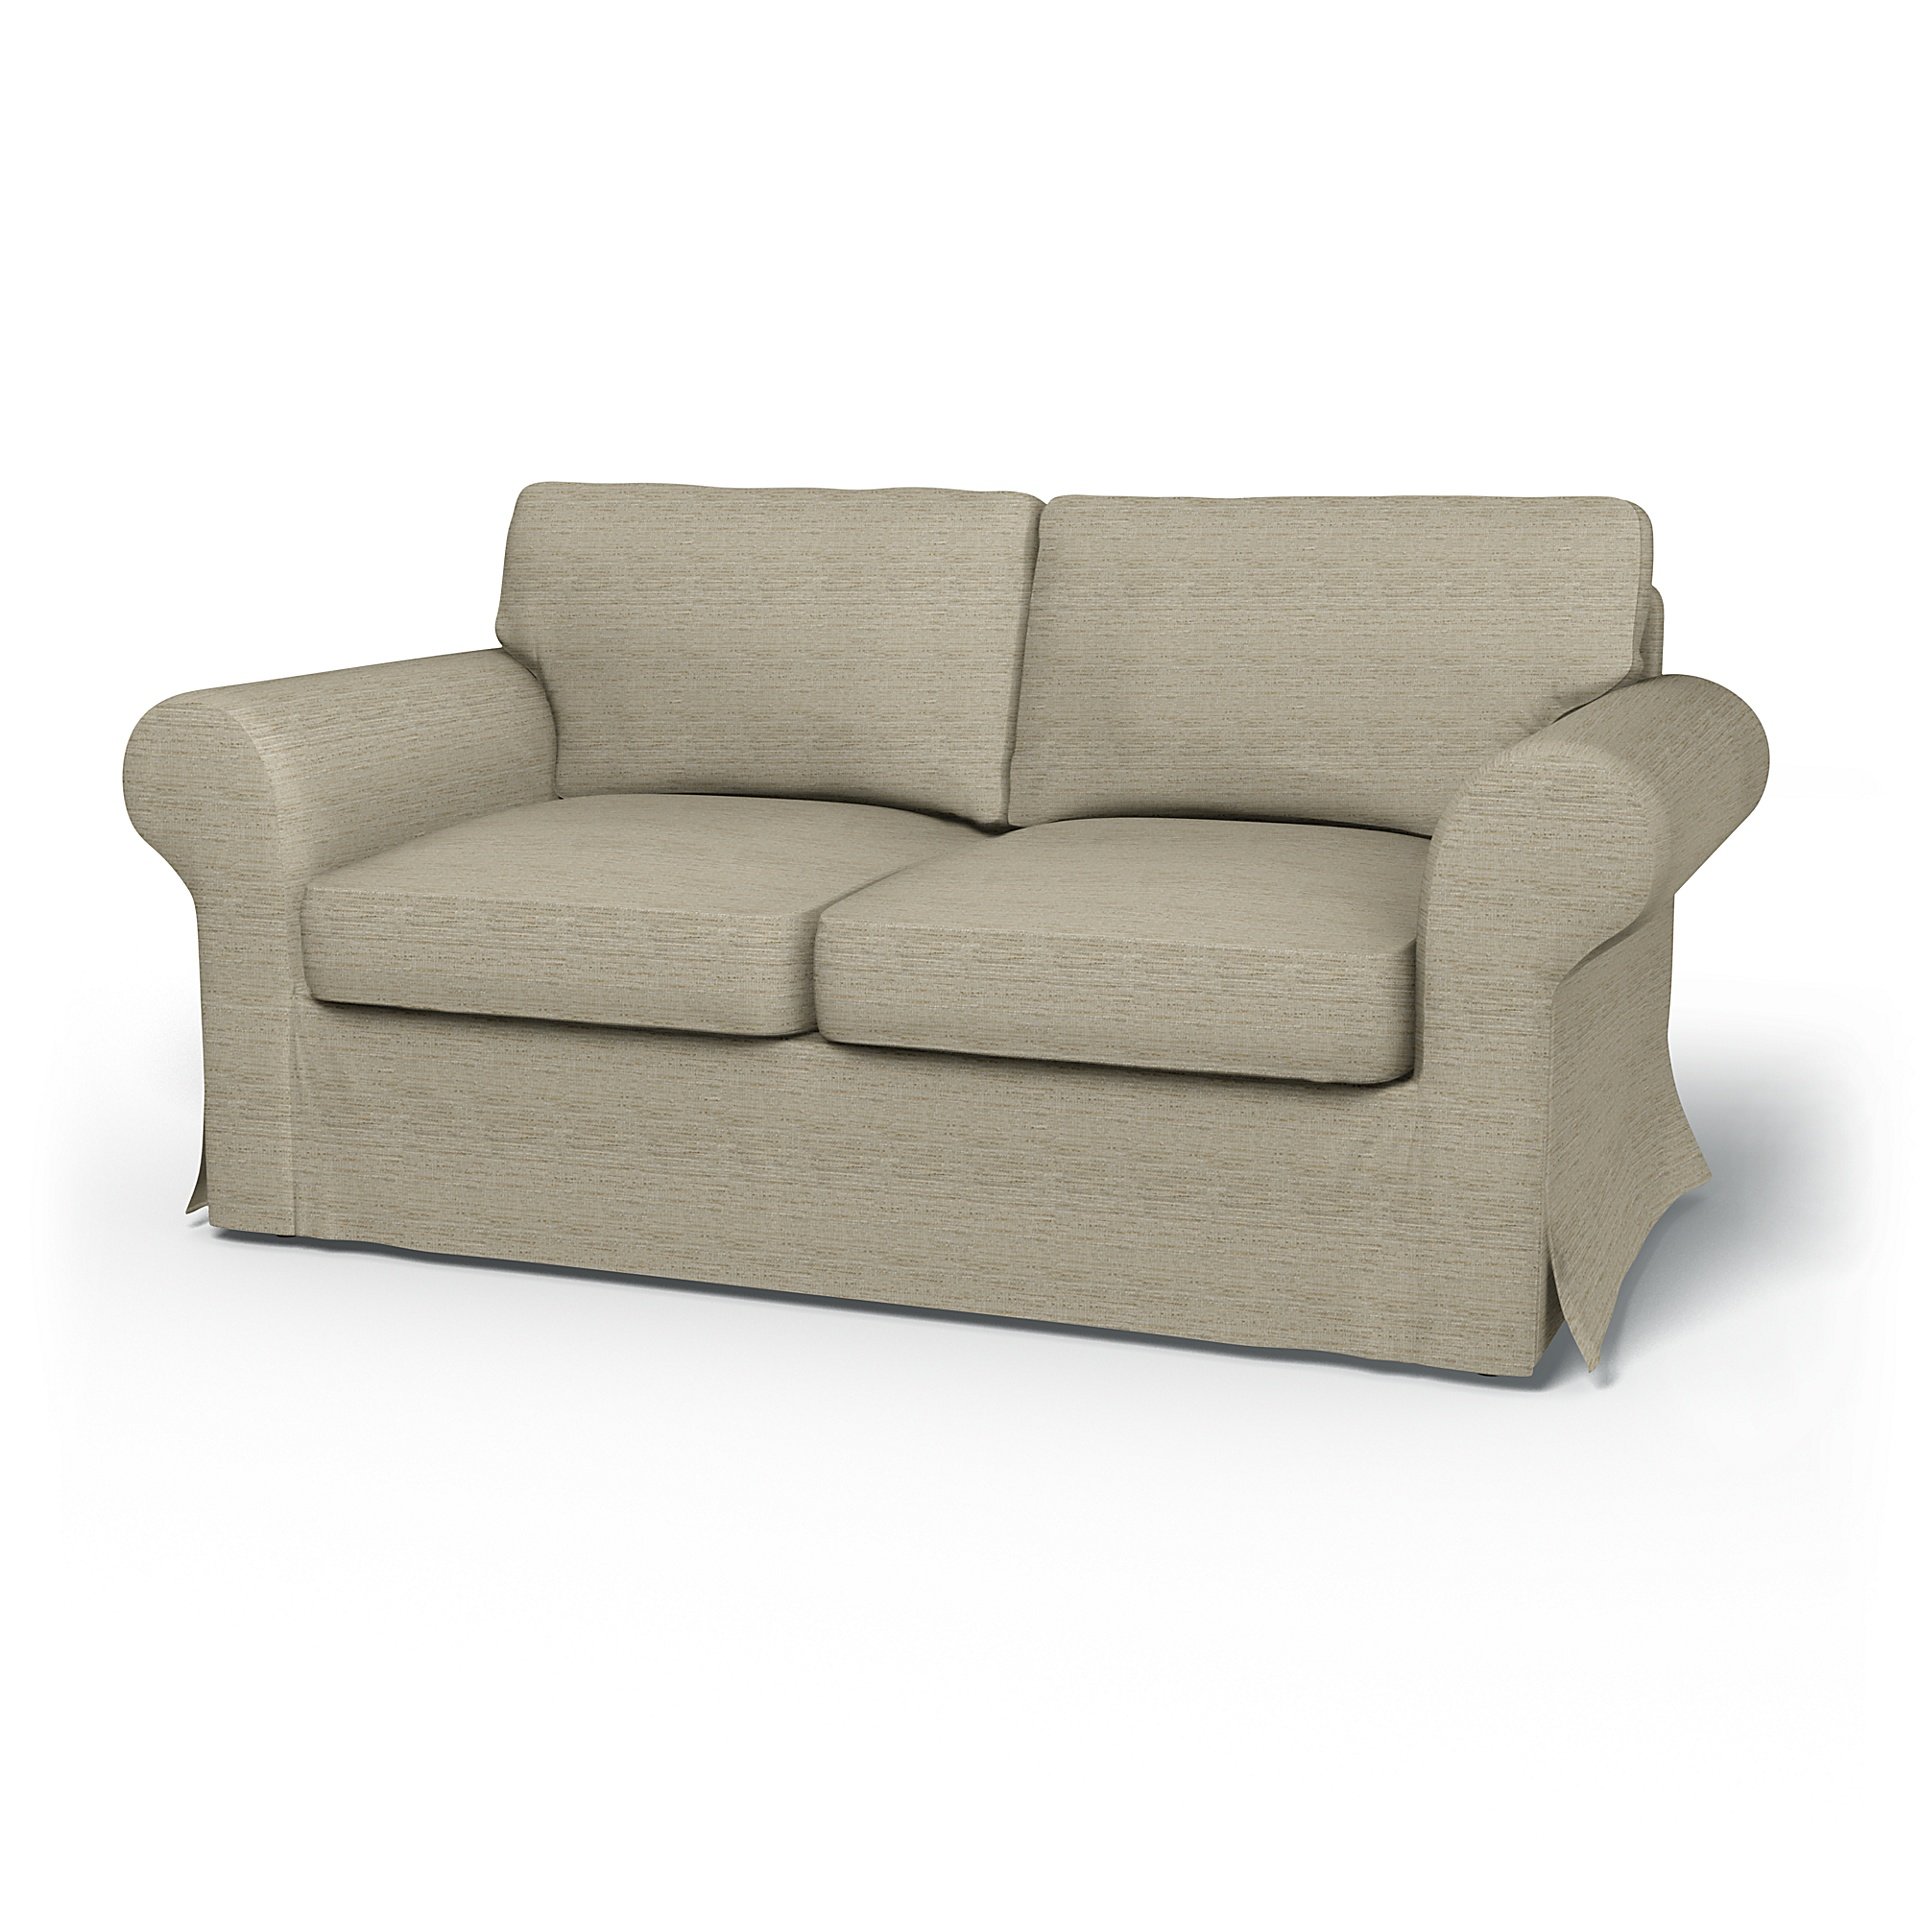 IKEA - Ektorp 2 Seater Sofa Bed Cover, Light Sand, Boucle & Texture - Bemz